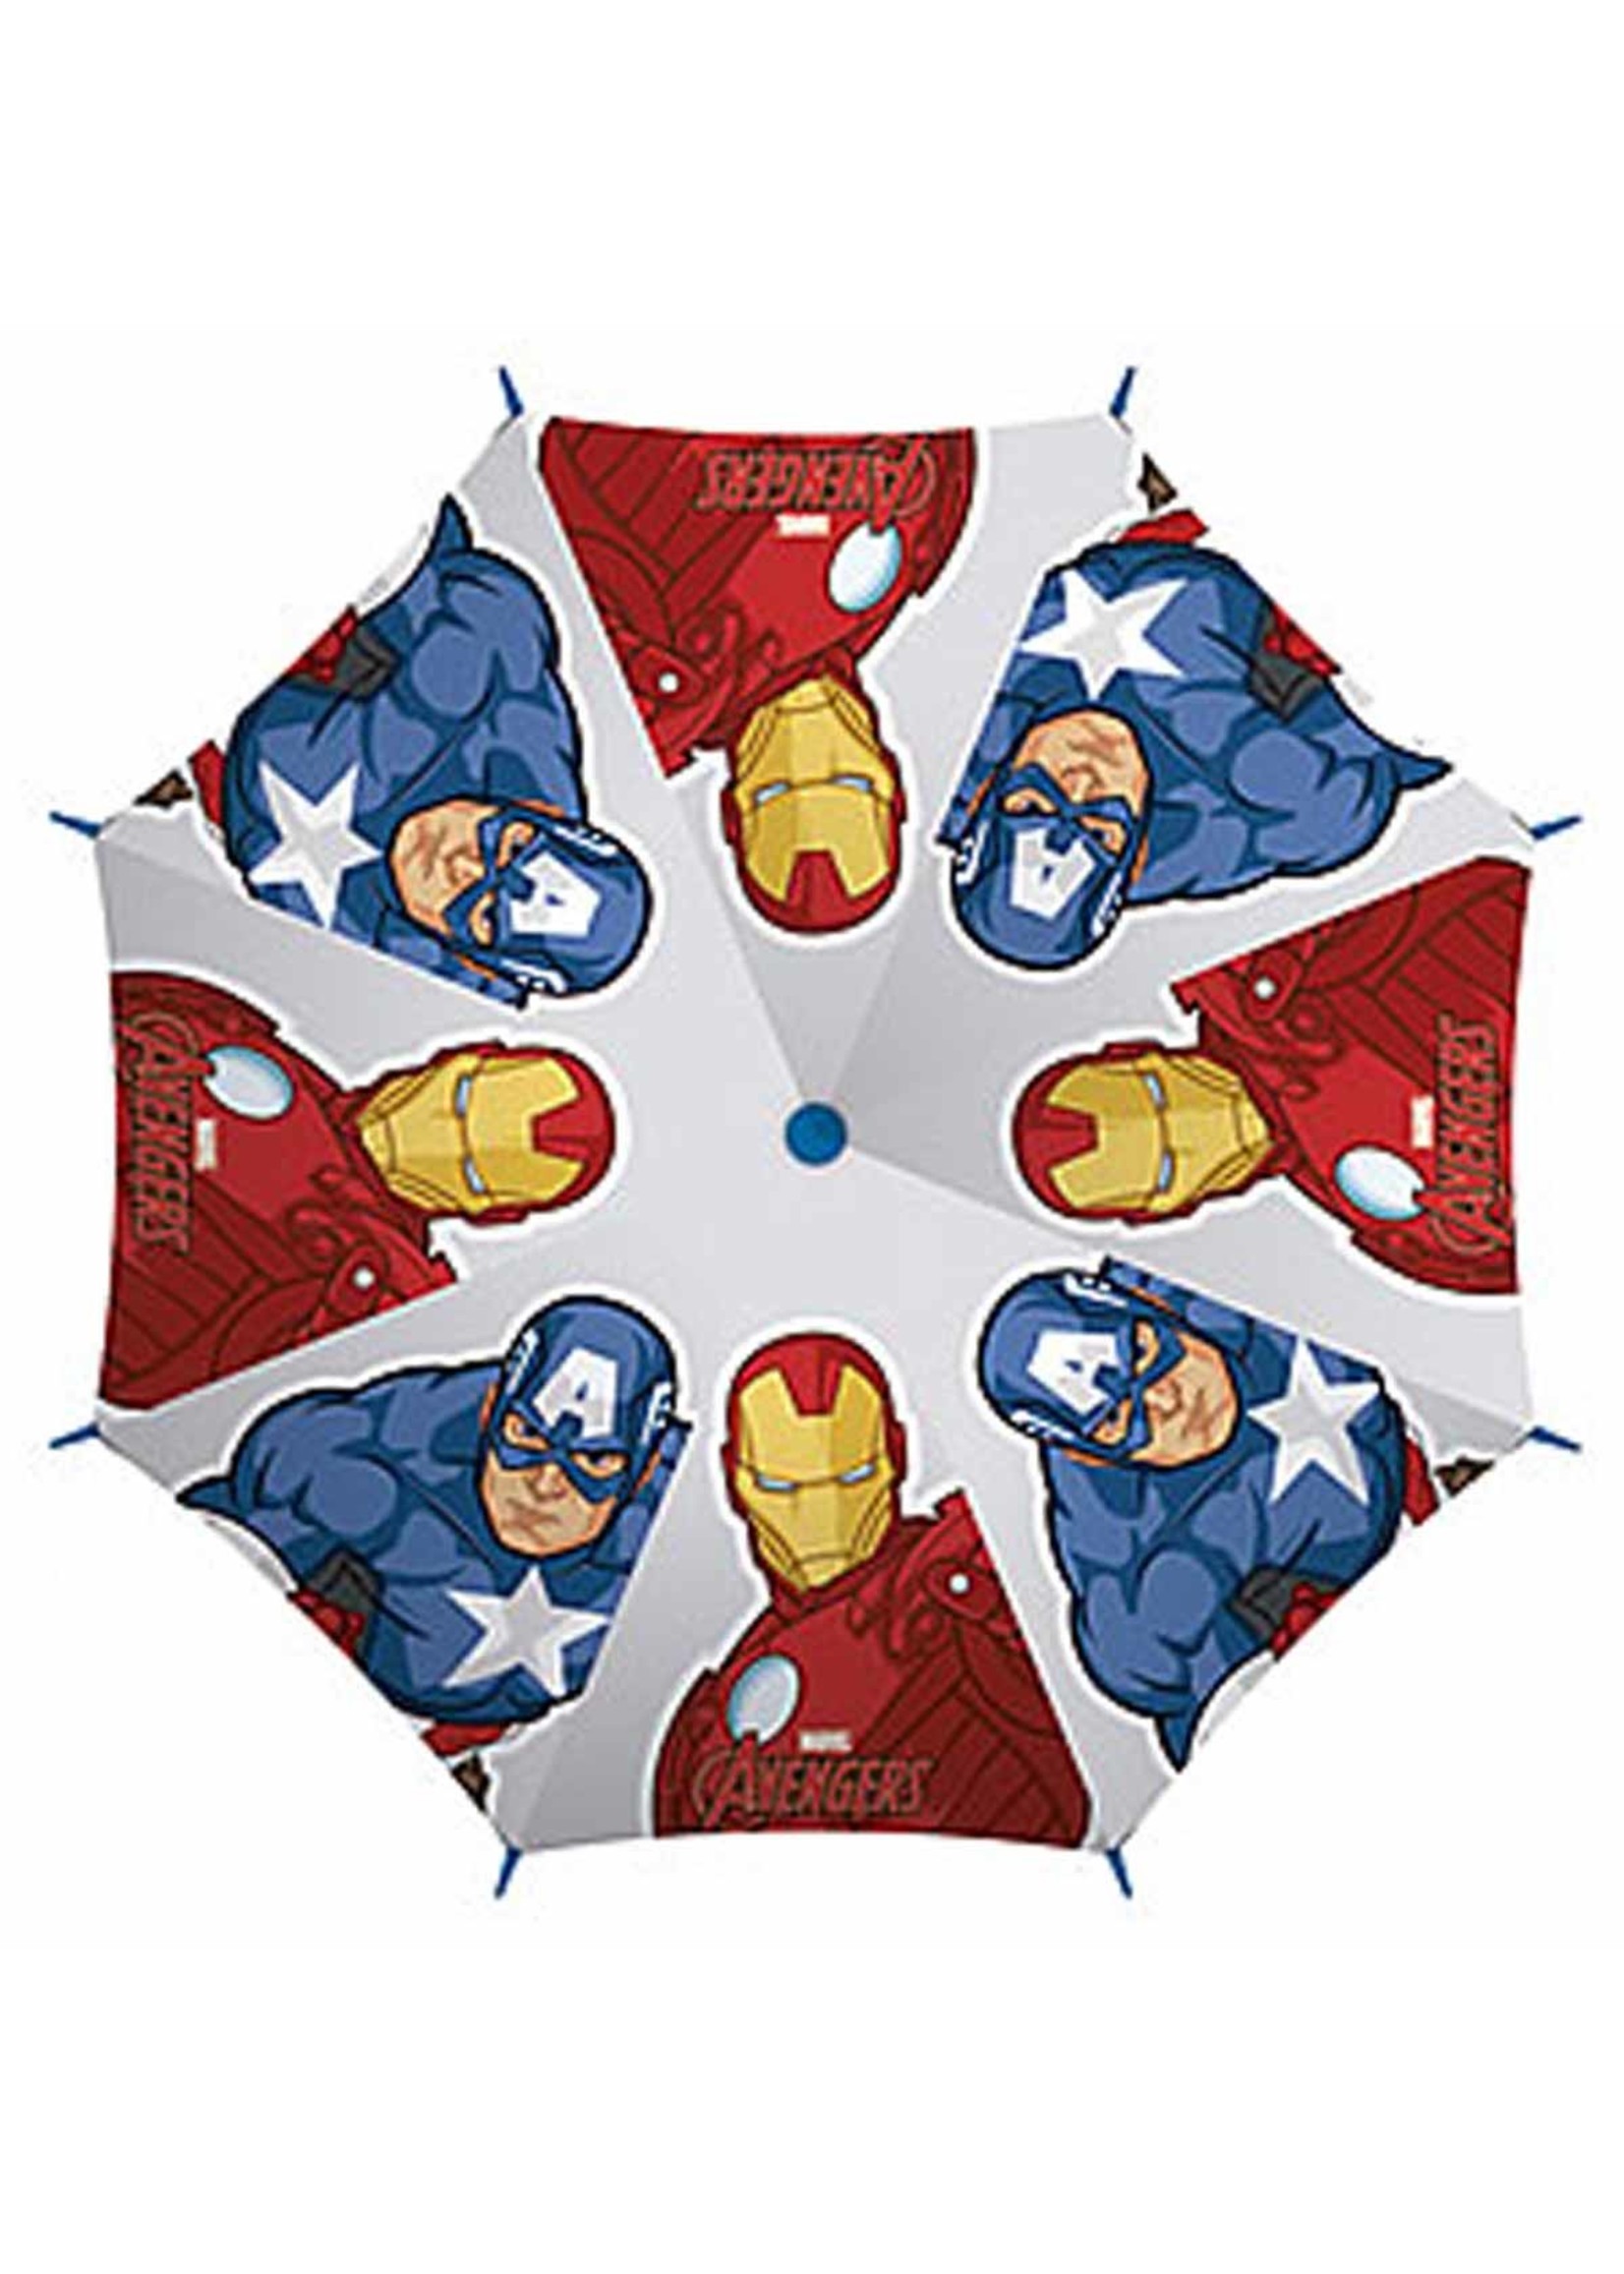 Marvel Avengers paraplu van Marvel wit-blauw